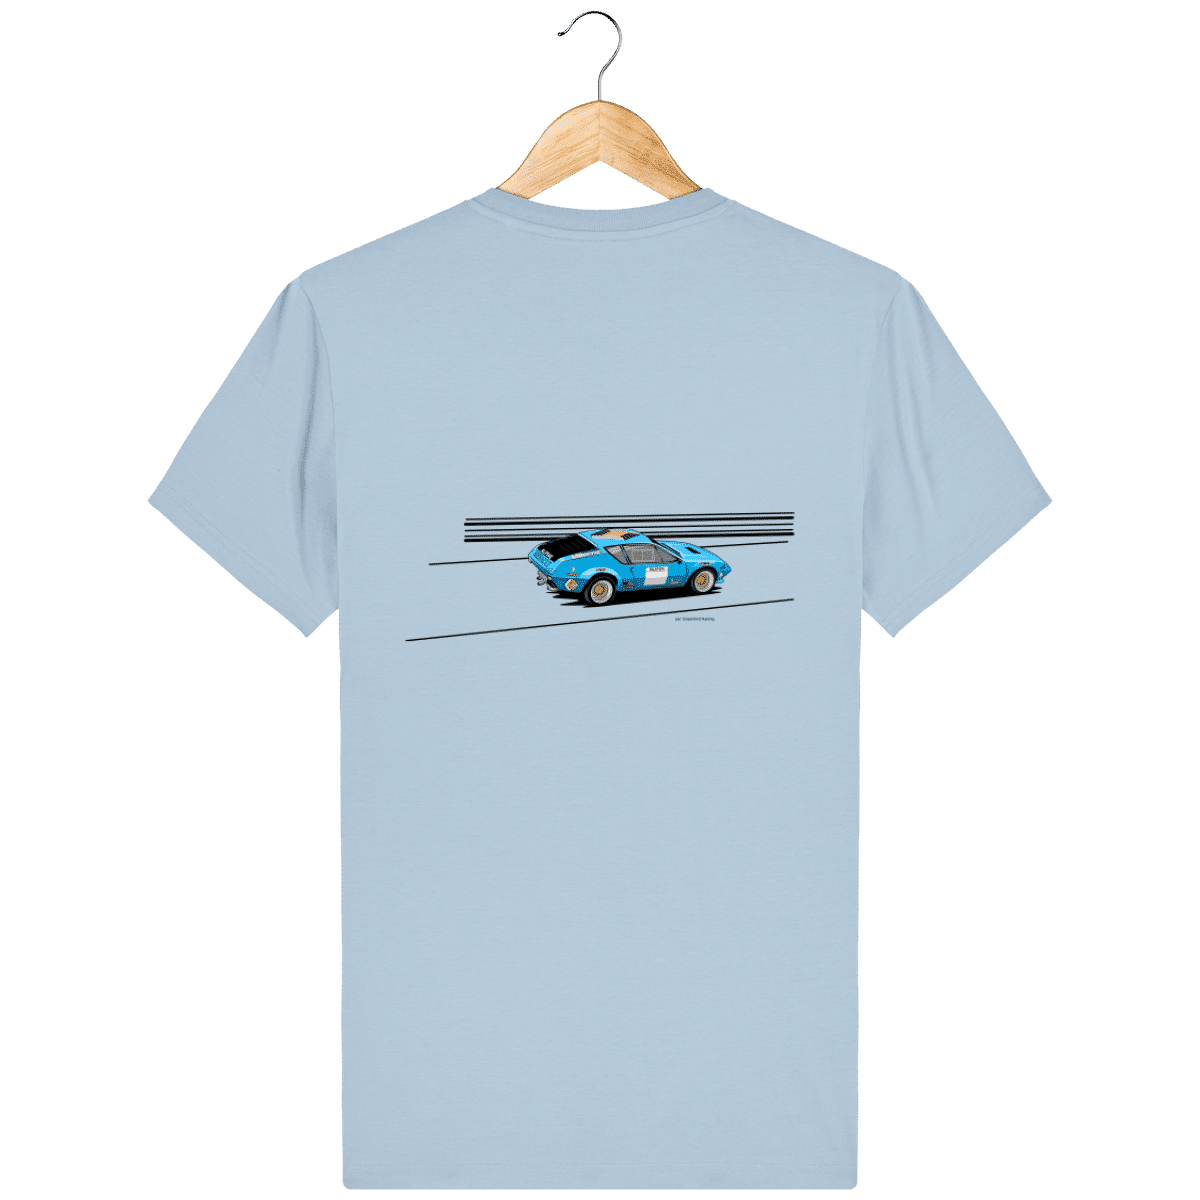 T-shirt Alpine A310 groupe 4 rallye VHC bleue - Sky blue - Dos